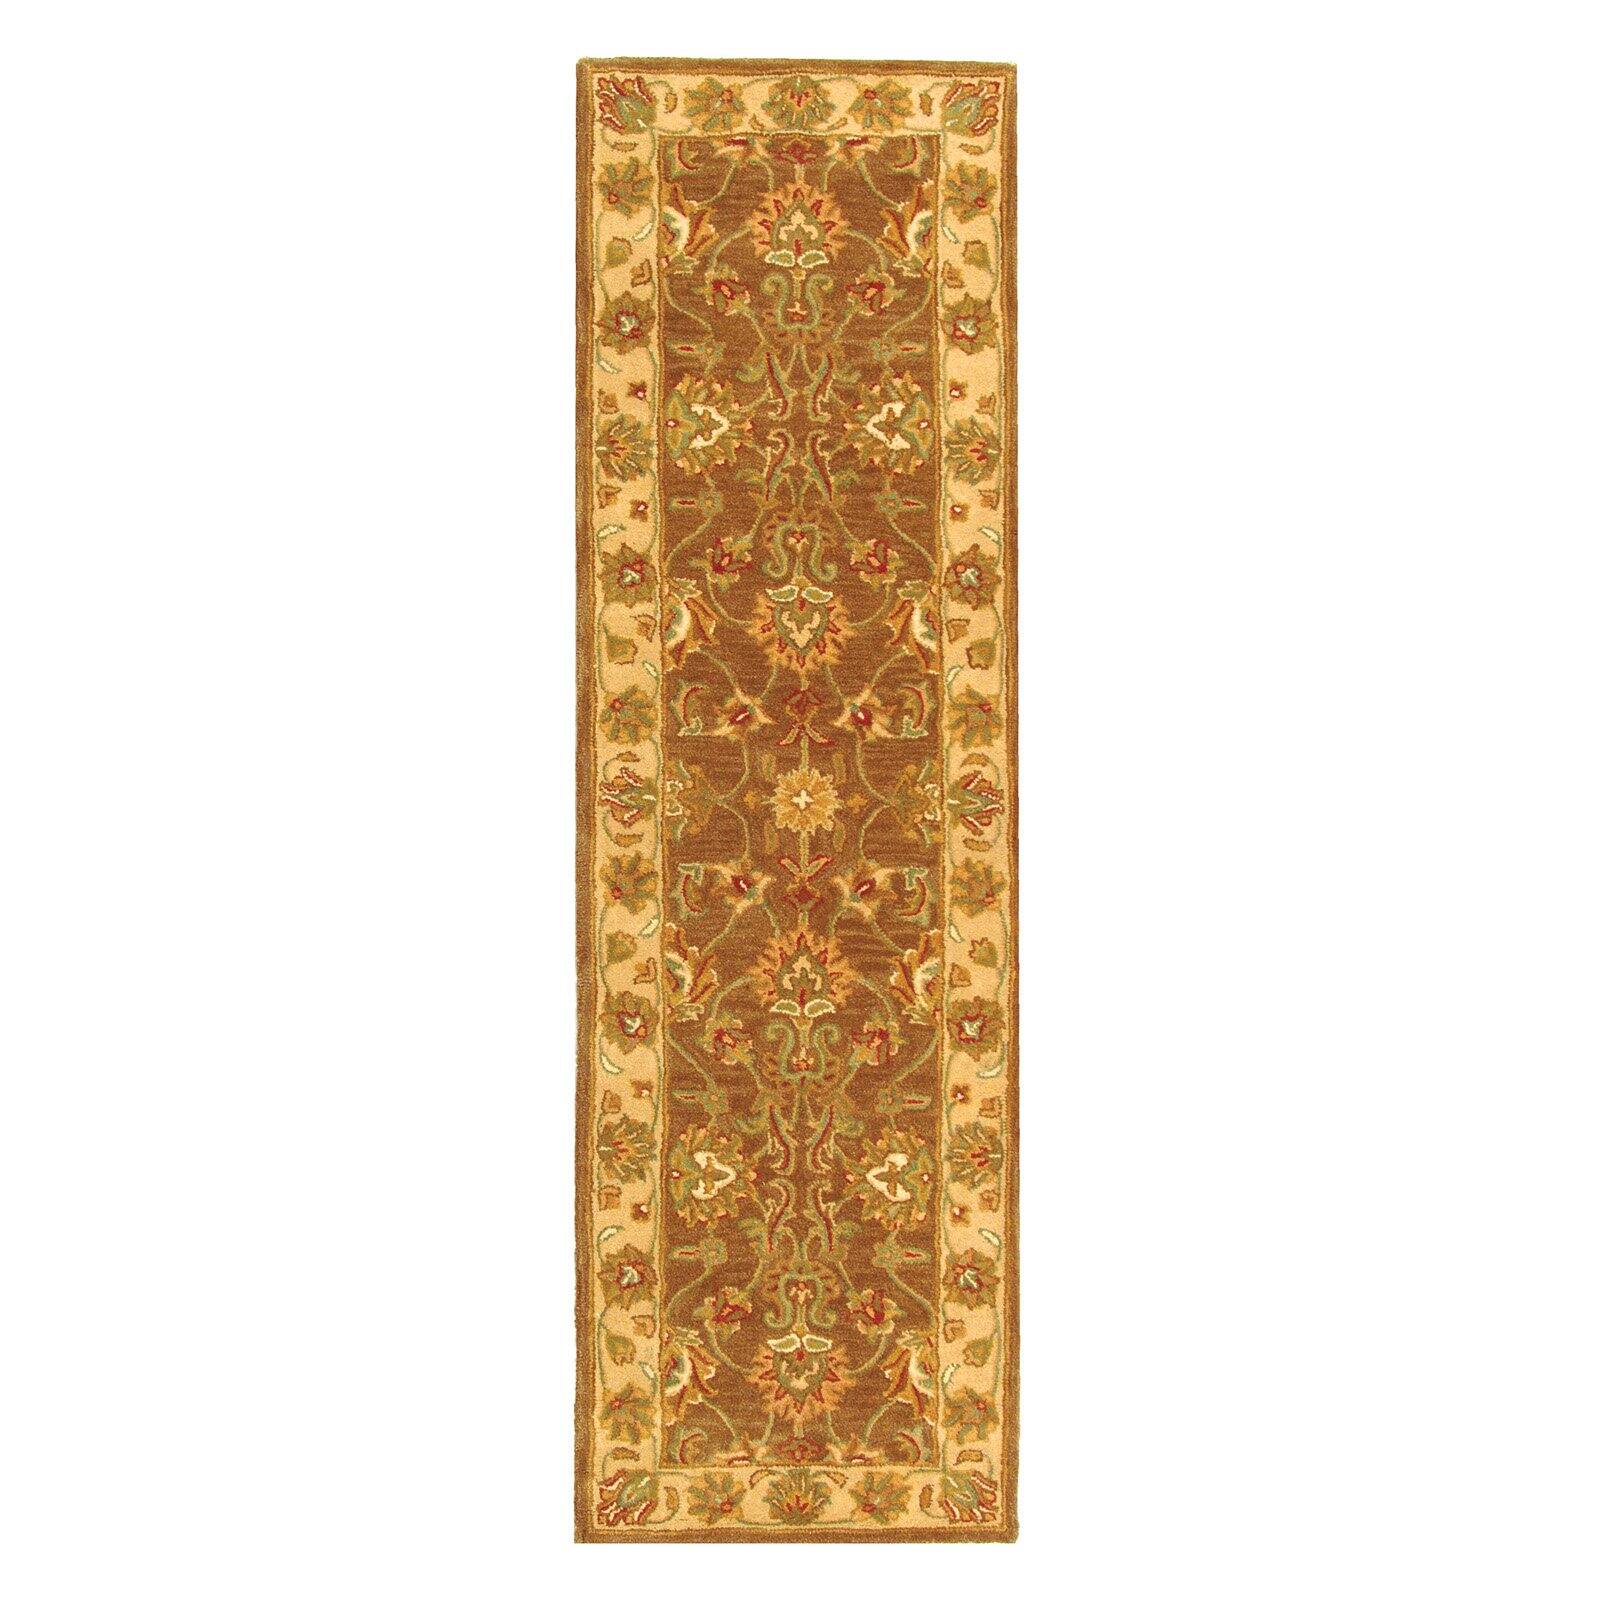 SAFAVIEH Heritage Regis Traditional Wool Area Rug, Brown/Ivory, 2'3" x 4' - image 3 of 9